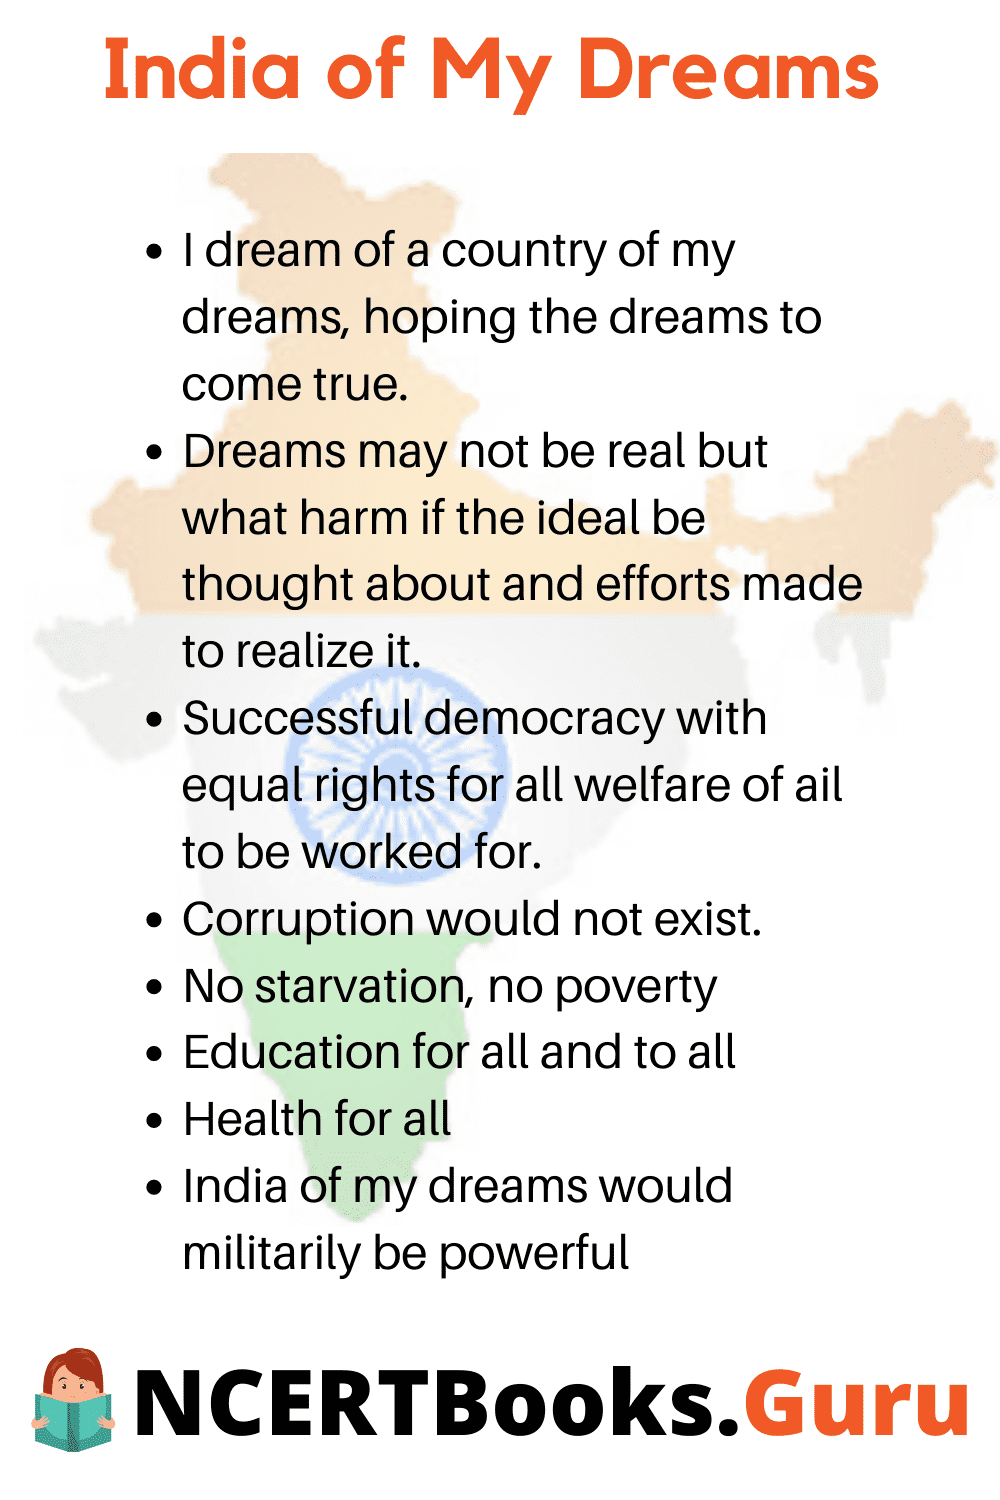 Essay on India of My Dreams